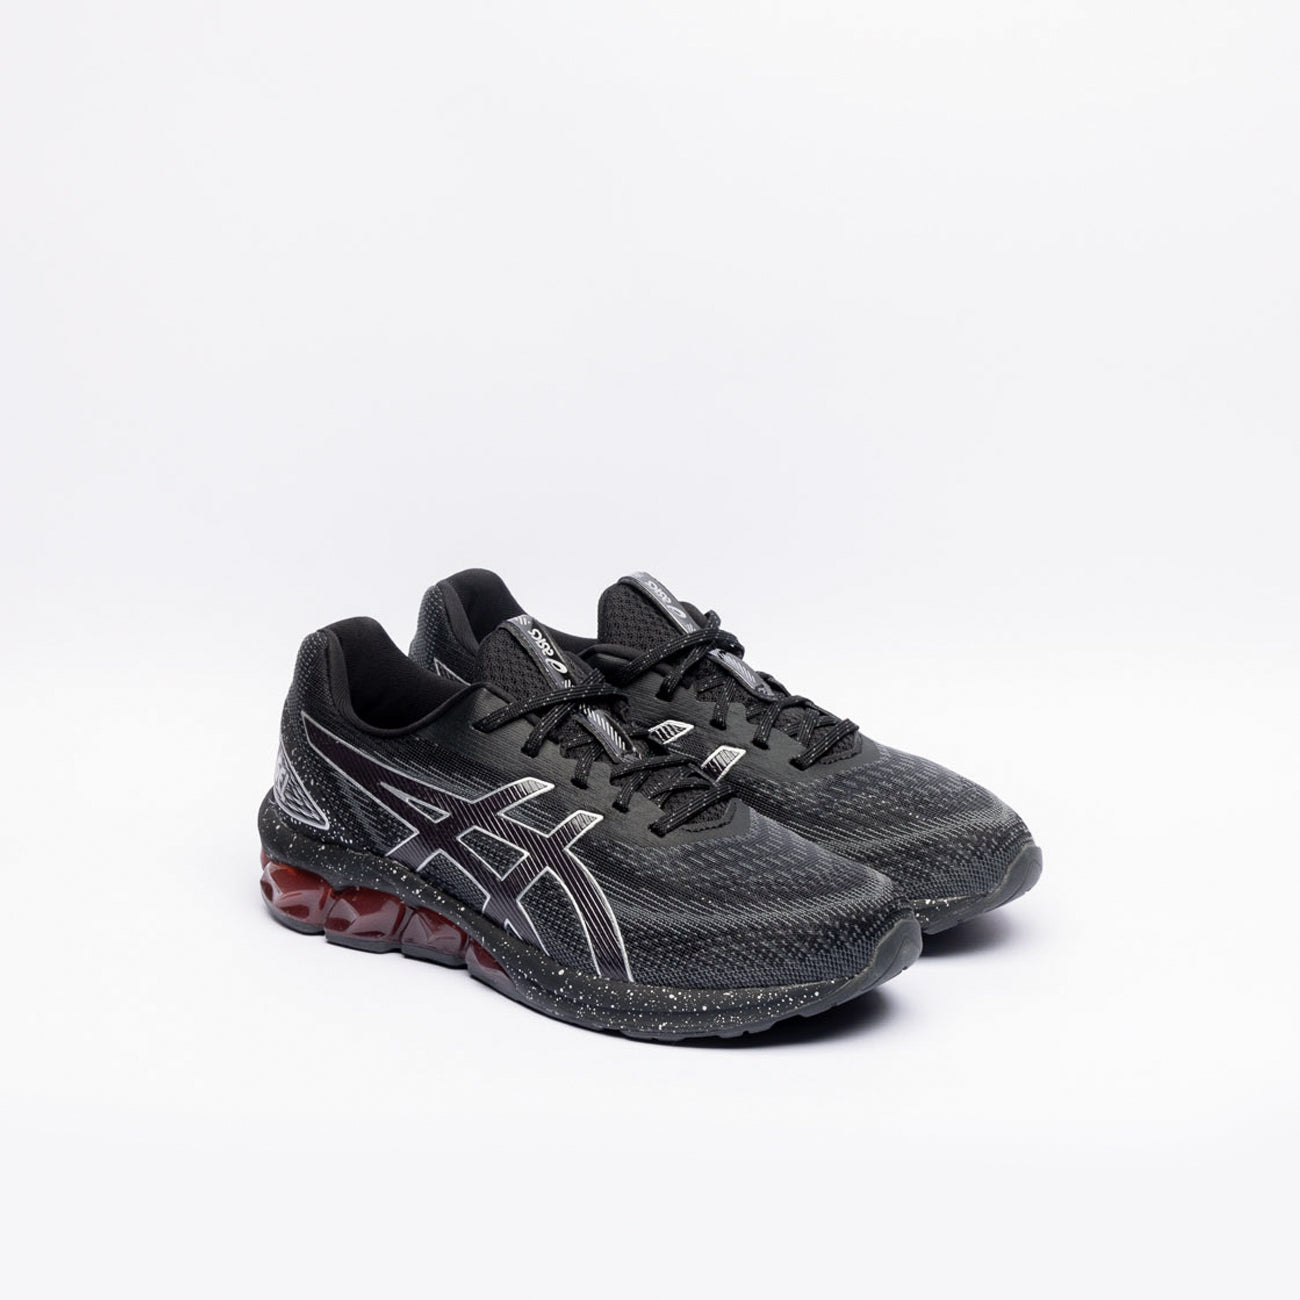 Asics Gel Quantum 180 VII running sneaker in black fabric and burgundy gel